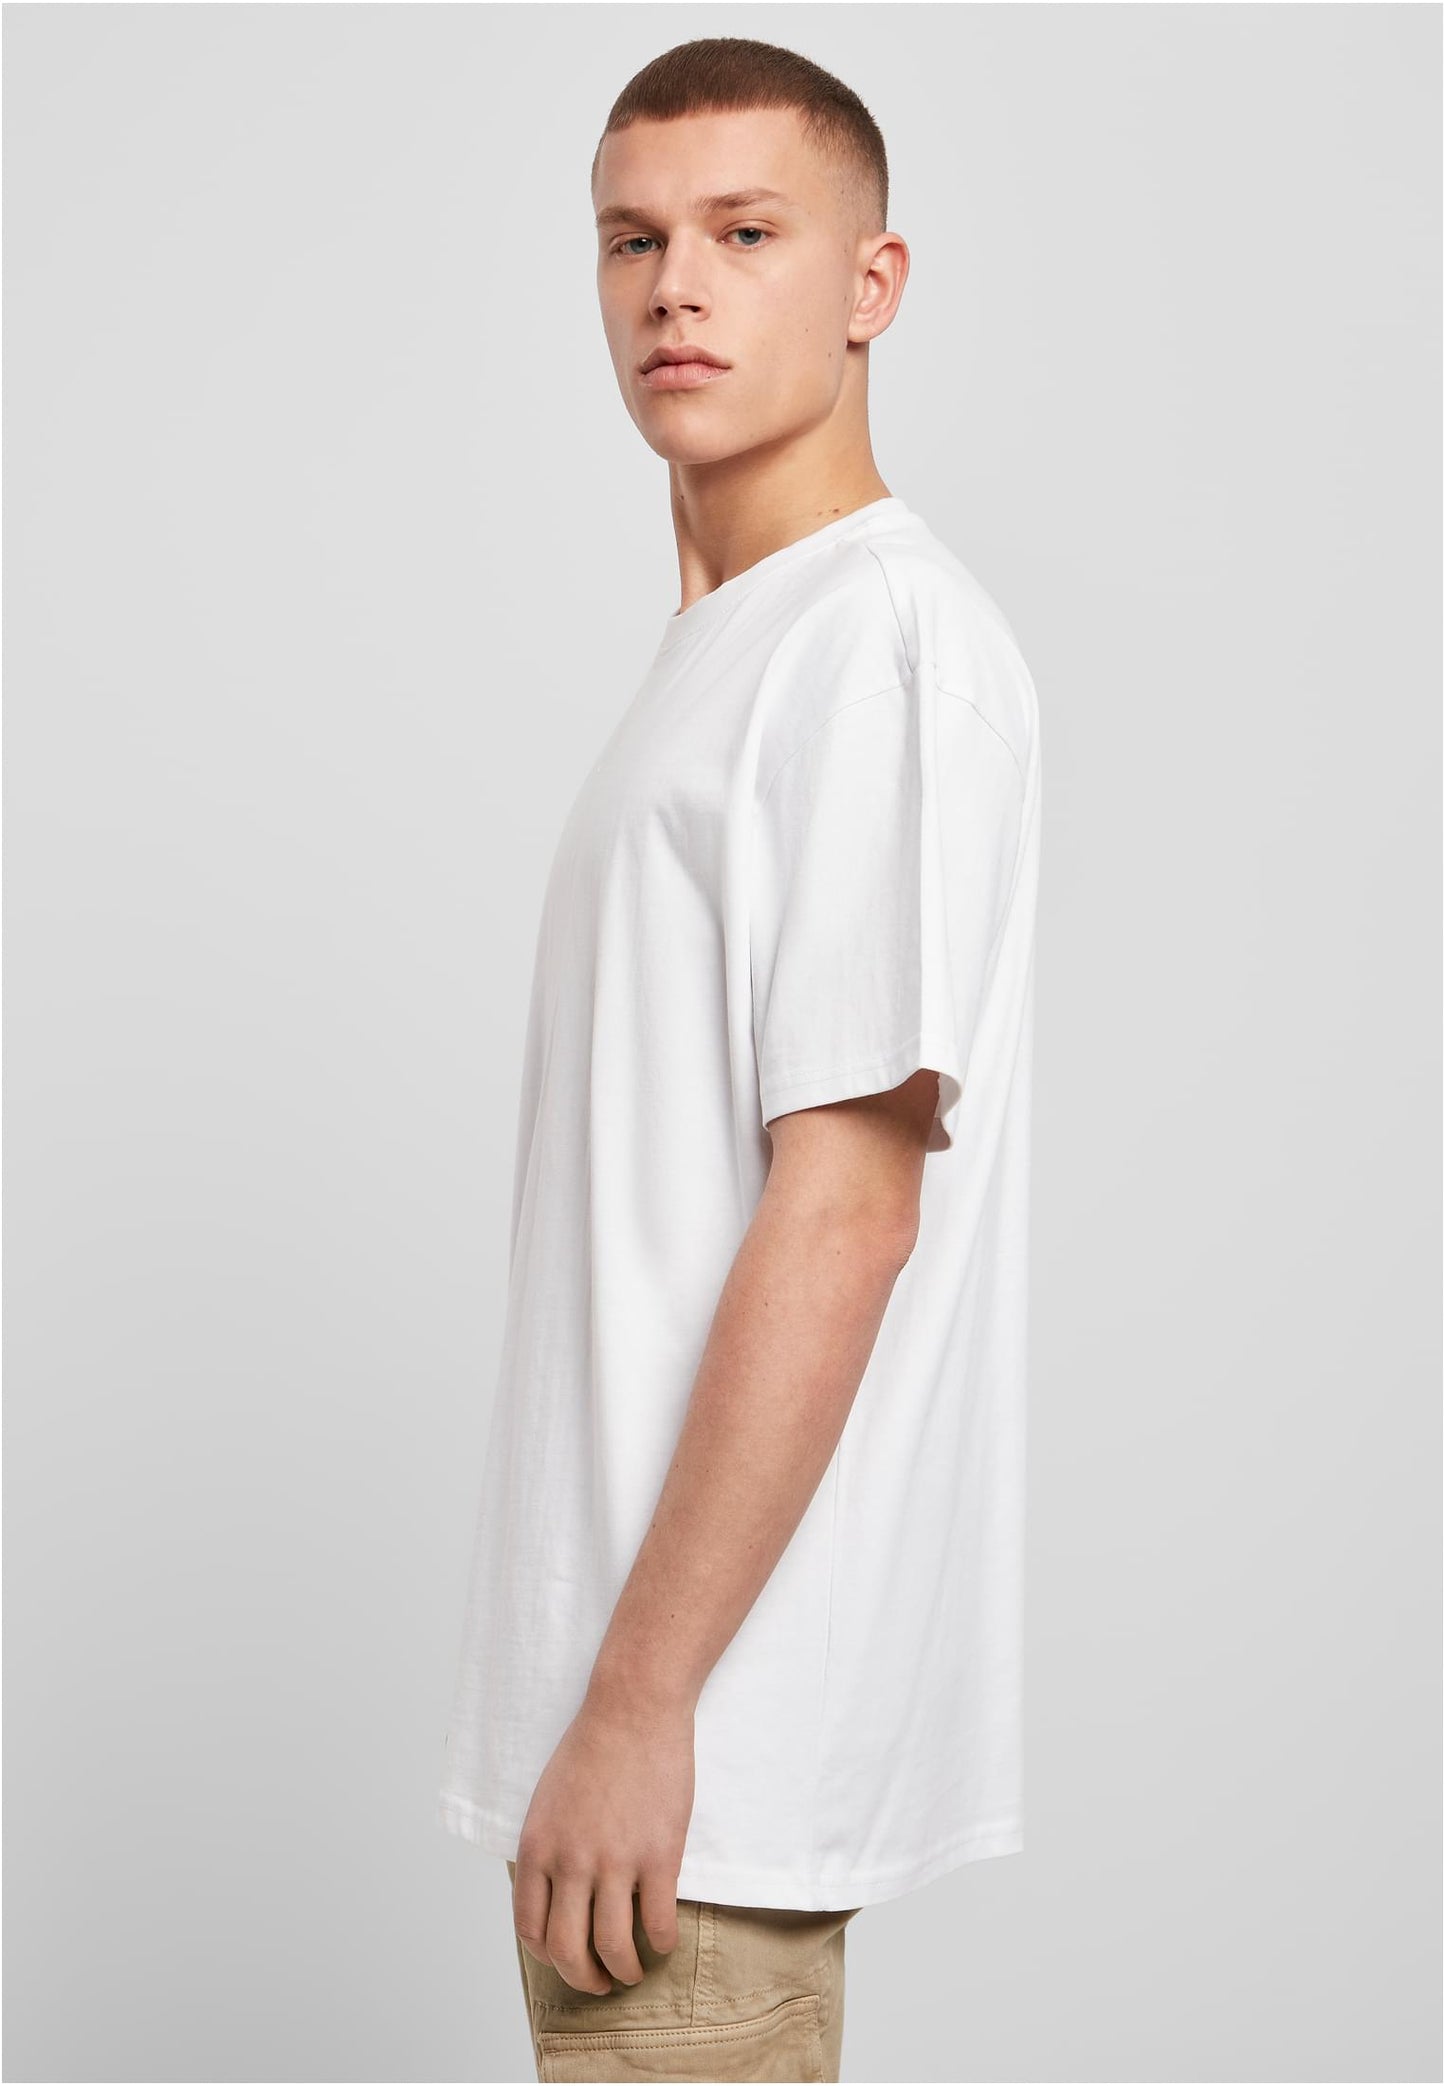 Tee-shirt Classic Oversize - Blanc